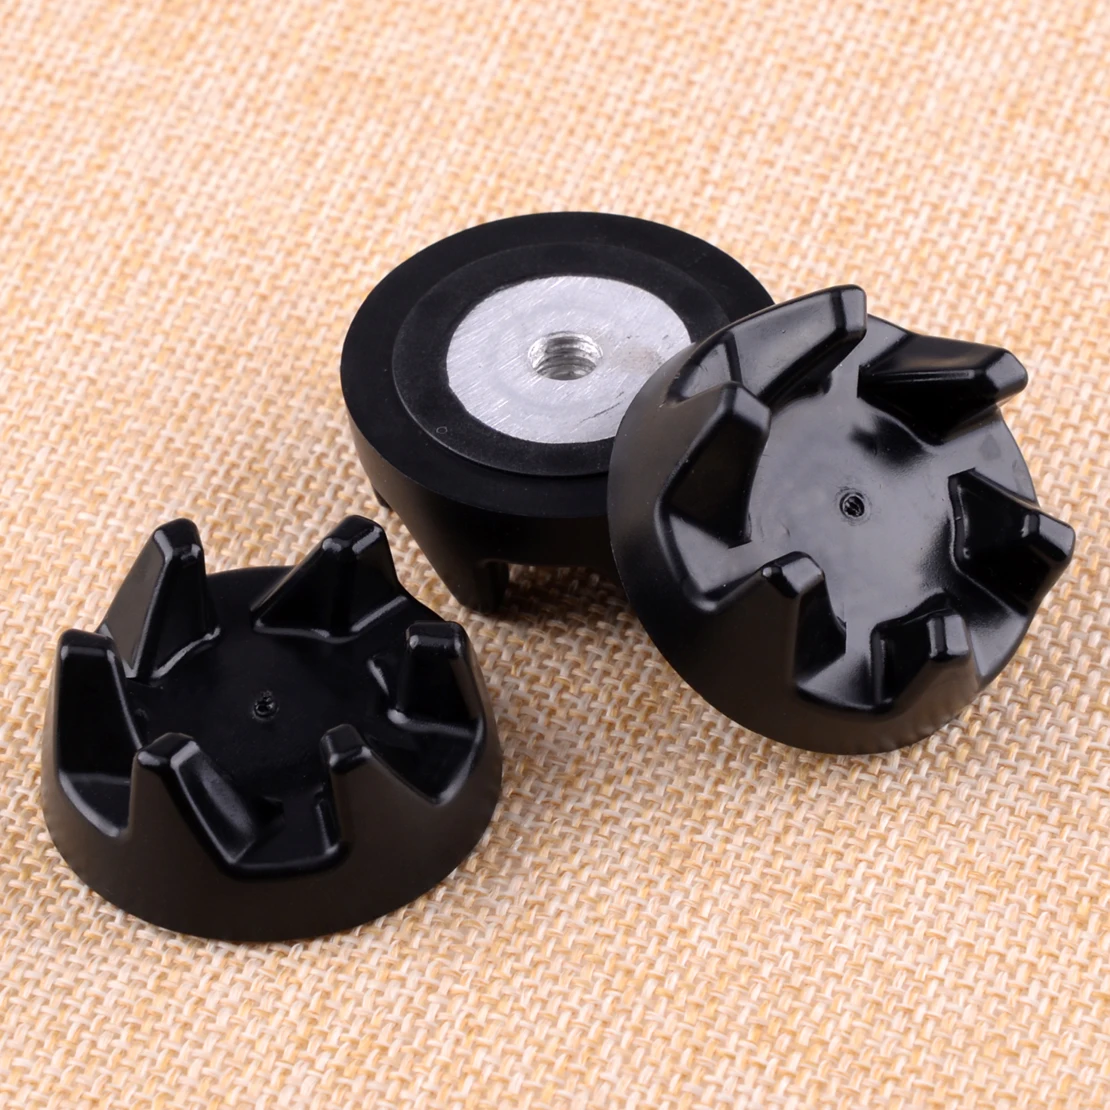 LETAOSK 3pcs Replacement Rubber Clutch Coupler Coupling Cog Shear Gear Mixer Parts Fit For Kitchenaid Blender 9704230